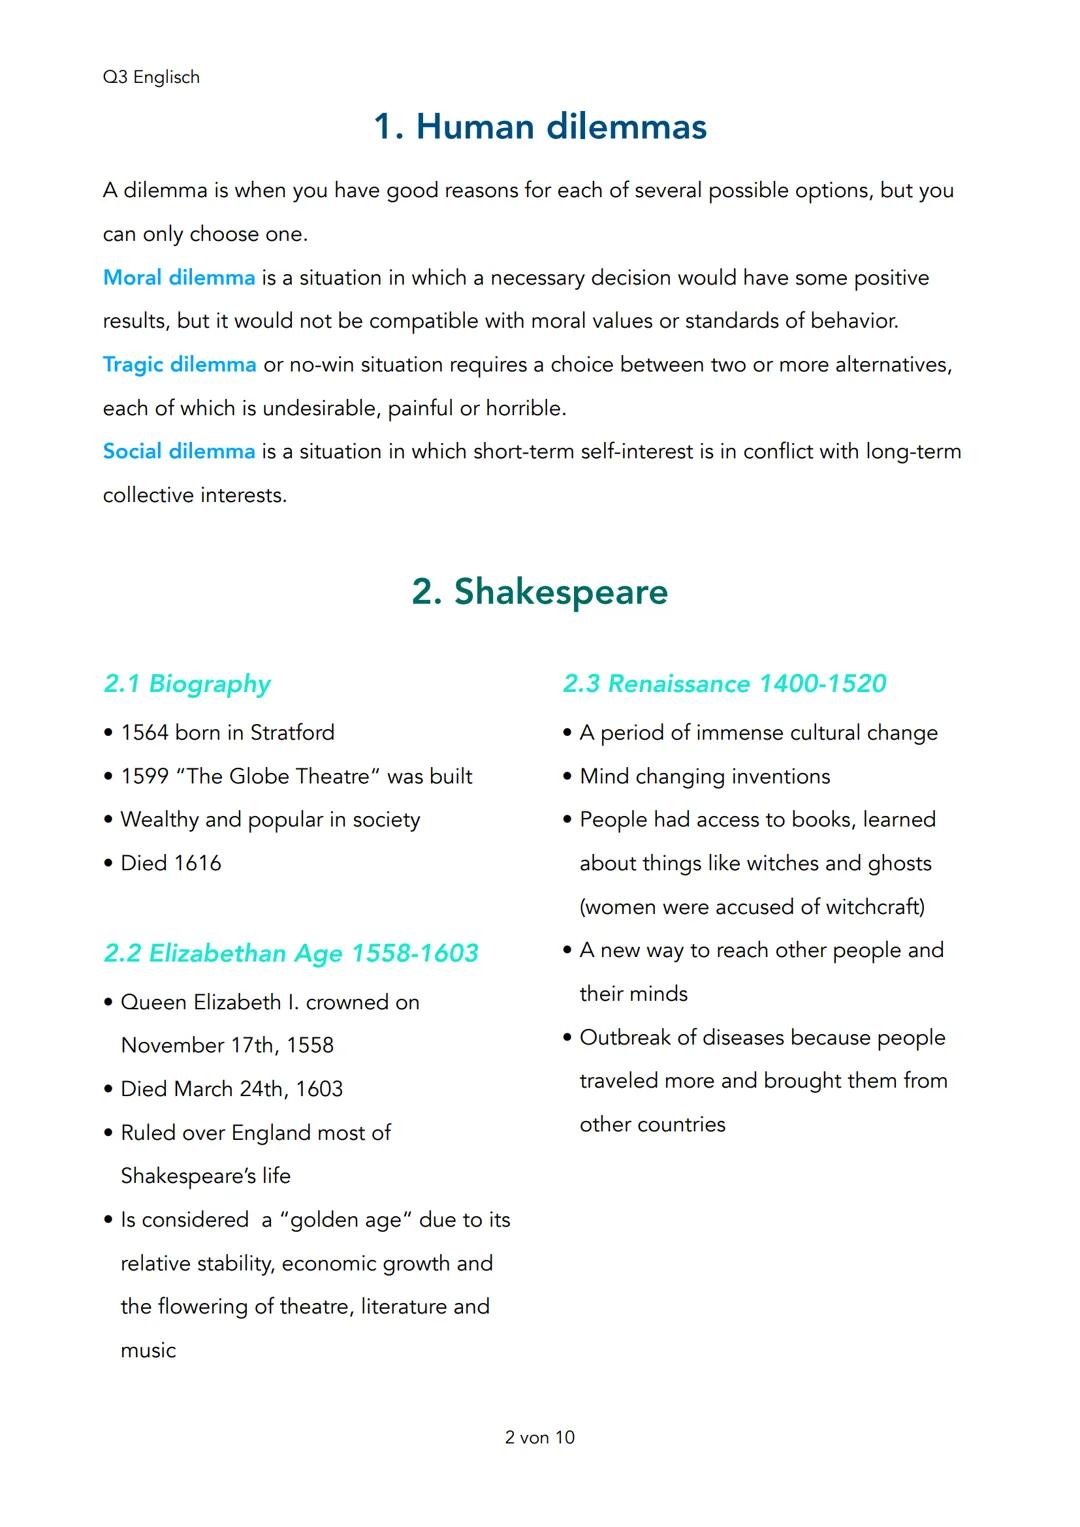 Q3 Englisch
1. Human dilemmas
2. Shakespeare
1. Biography
2. Elizabethan Age
3. Renaissance
4. Sonnet
5. Analyzing Shakespearean sonnets
3. 